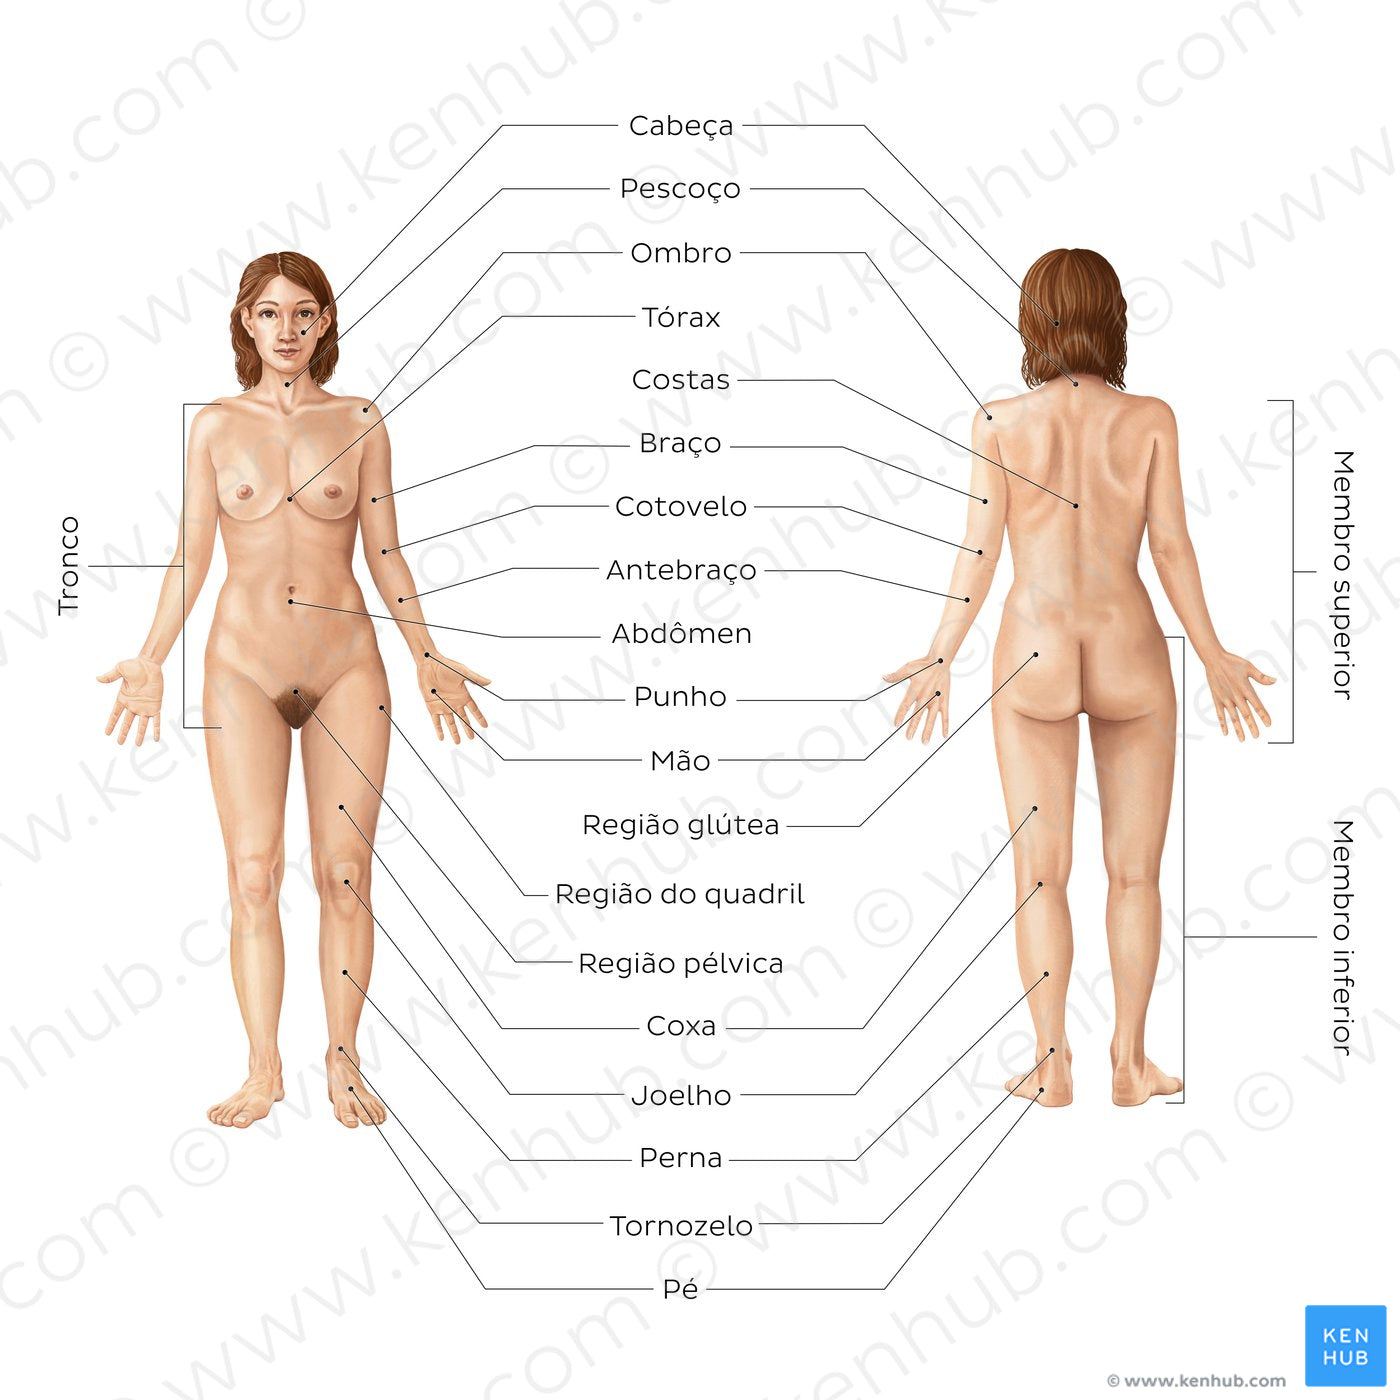 Regions of the body (Portuguese)